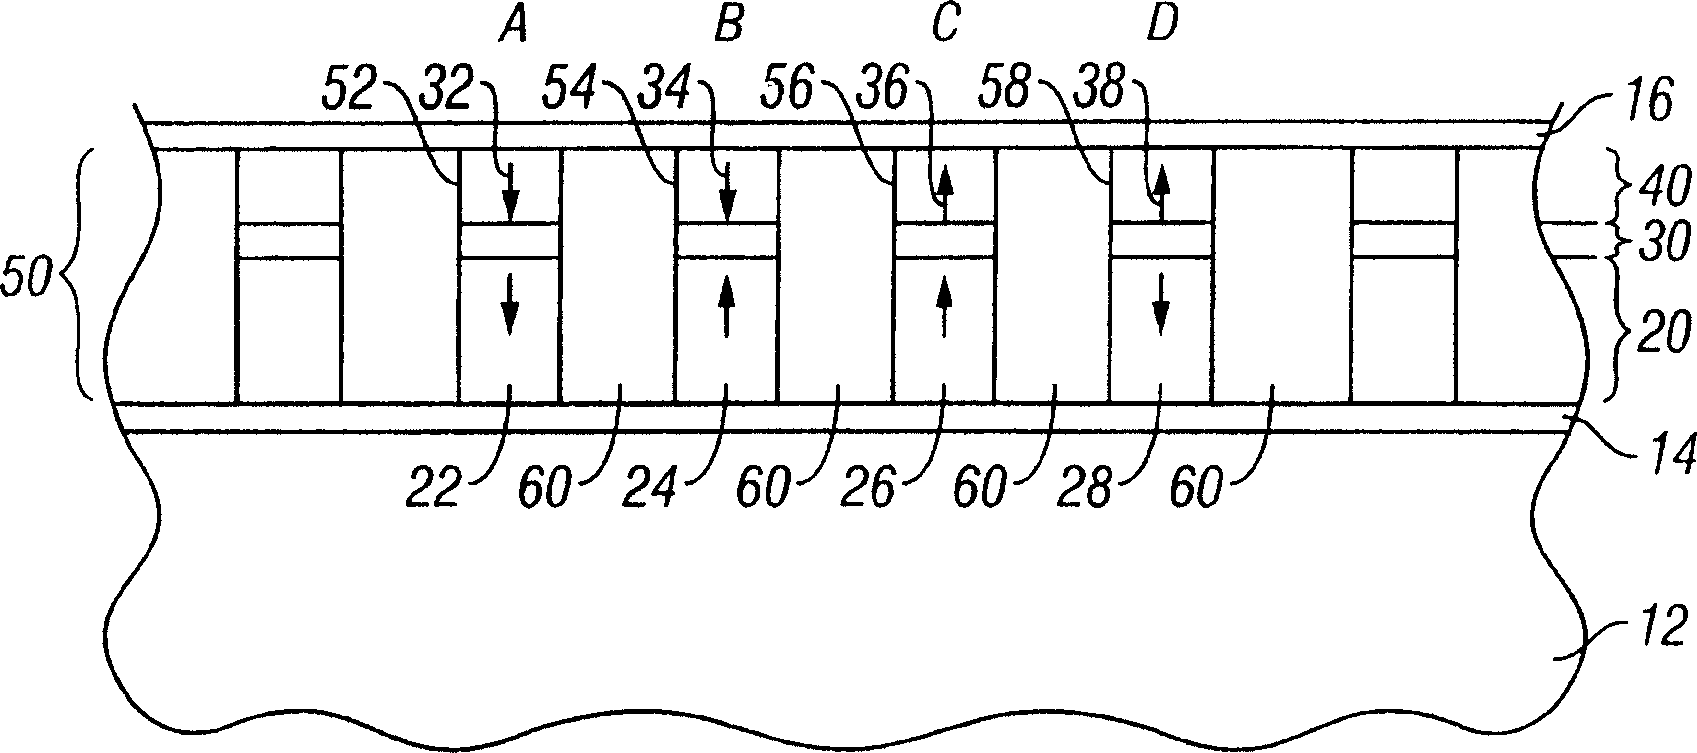 Method for magnetic recording on patterned multilevel perpendicular media